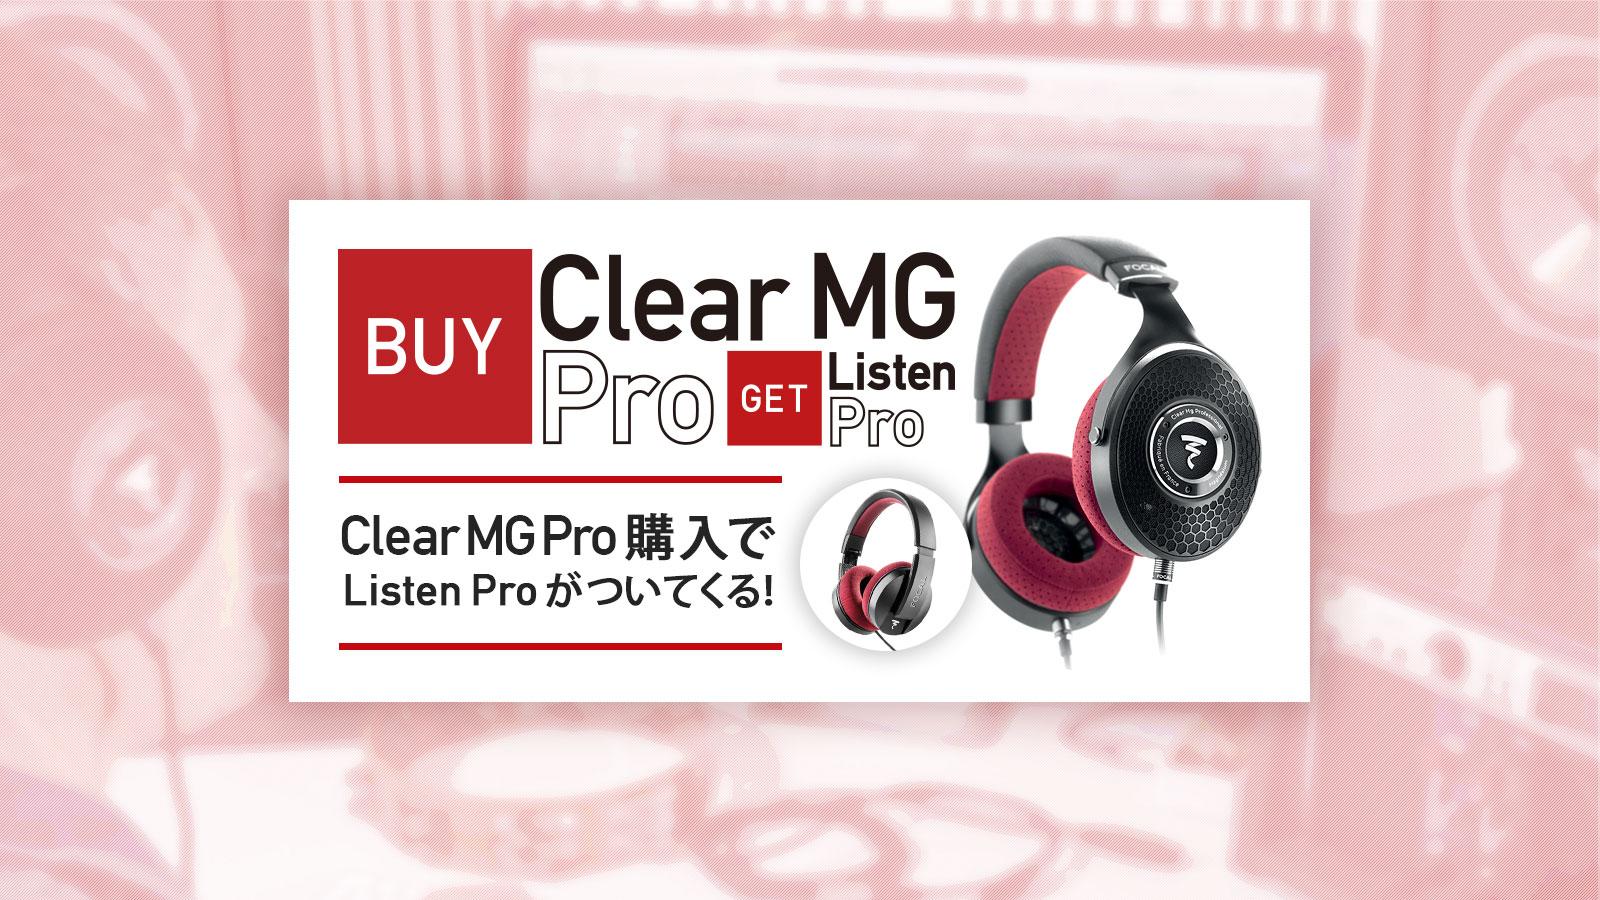 Clear MG Proを買うとListen Proが無料でついてくる！Clear MG Pro +Listen Pro セット